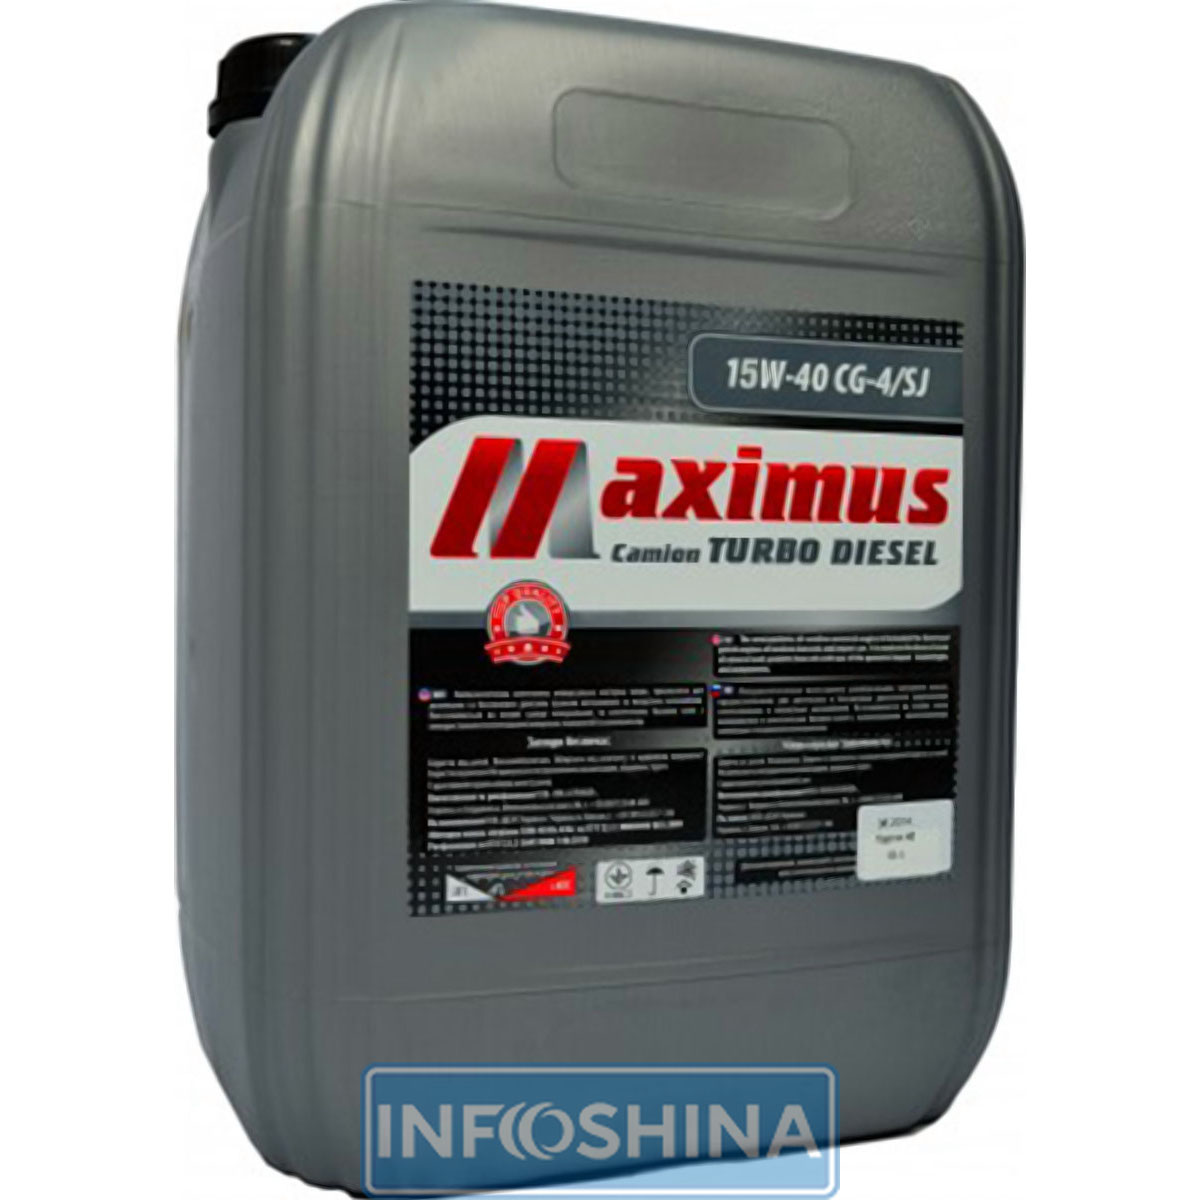 Купить масло Maximus Camion Turbo Diesel Mineral CG-4/SJ 15W-40 (18л)